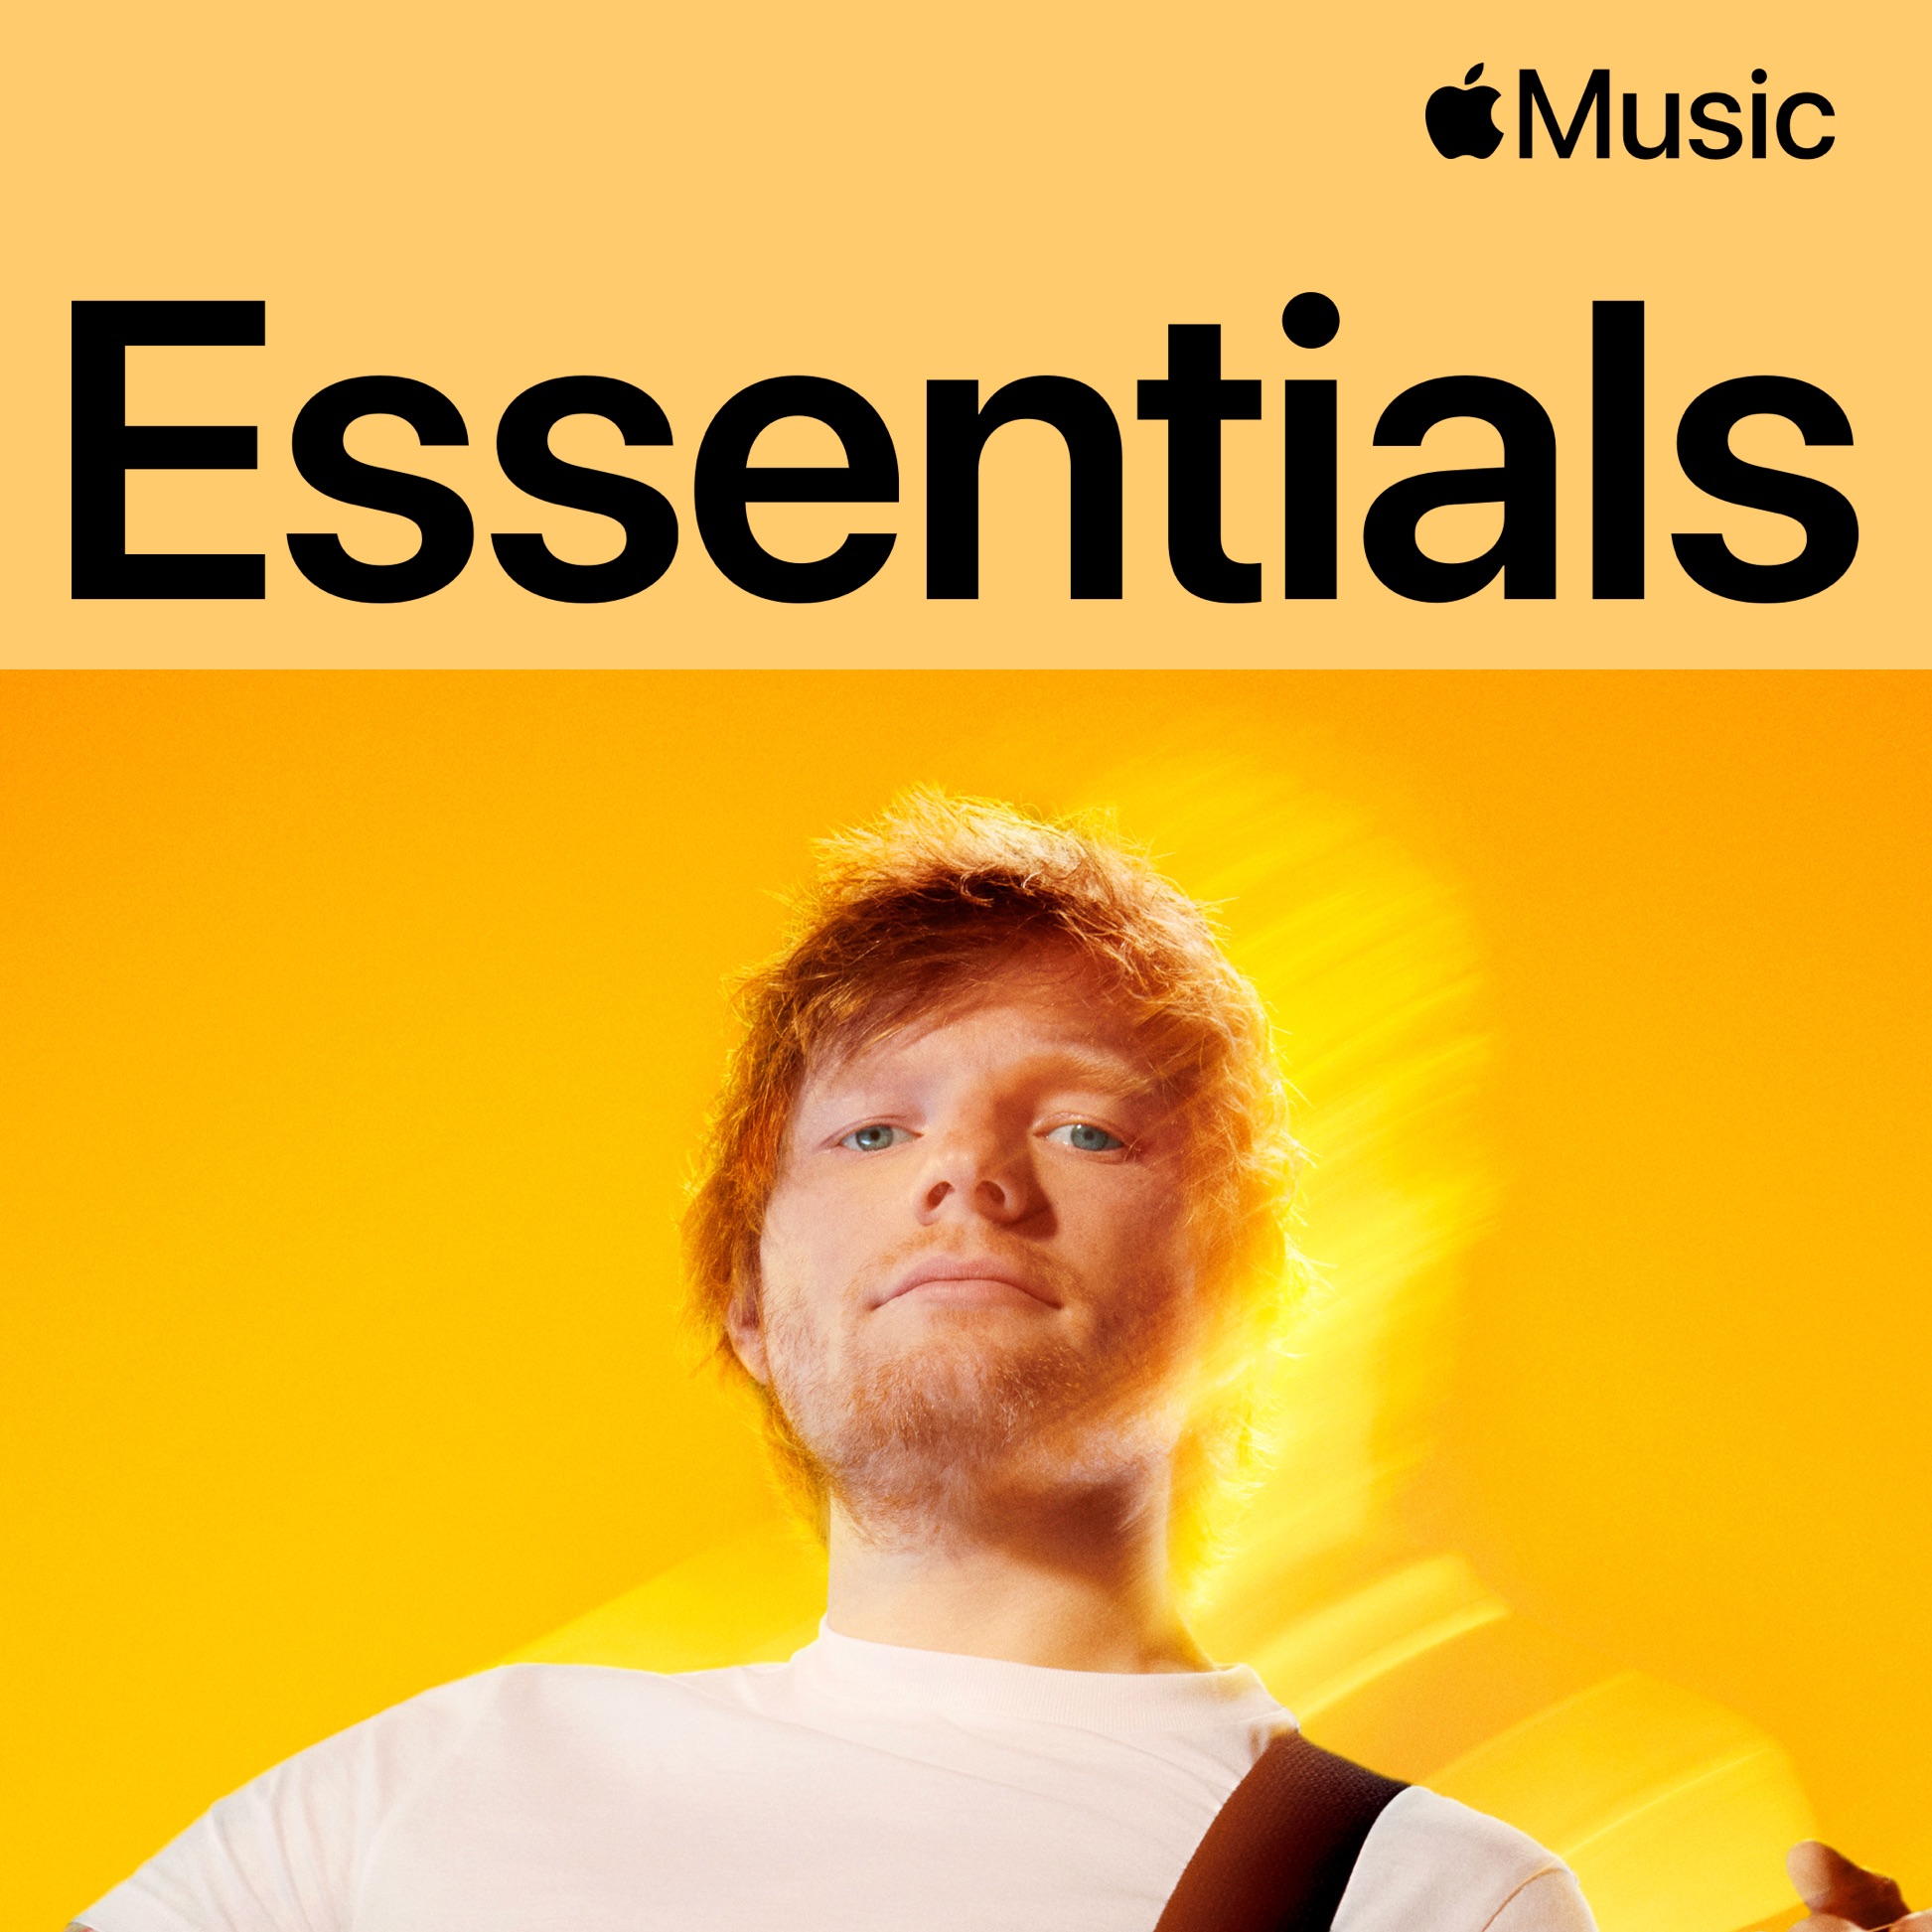 Ed Sheeran Essentials - Playlist - Apple Music United Kingdom